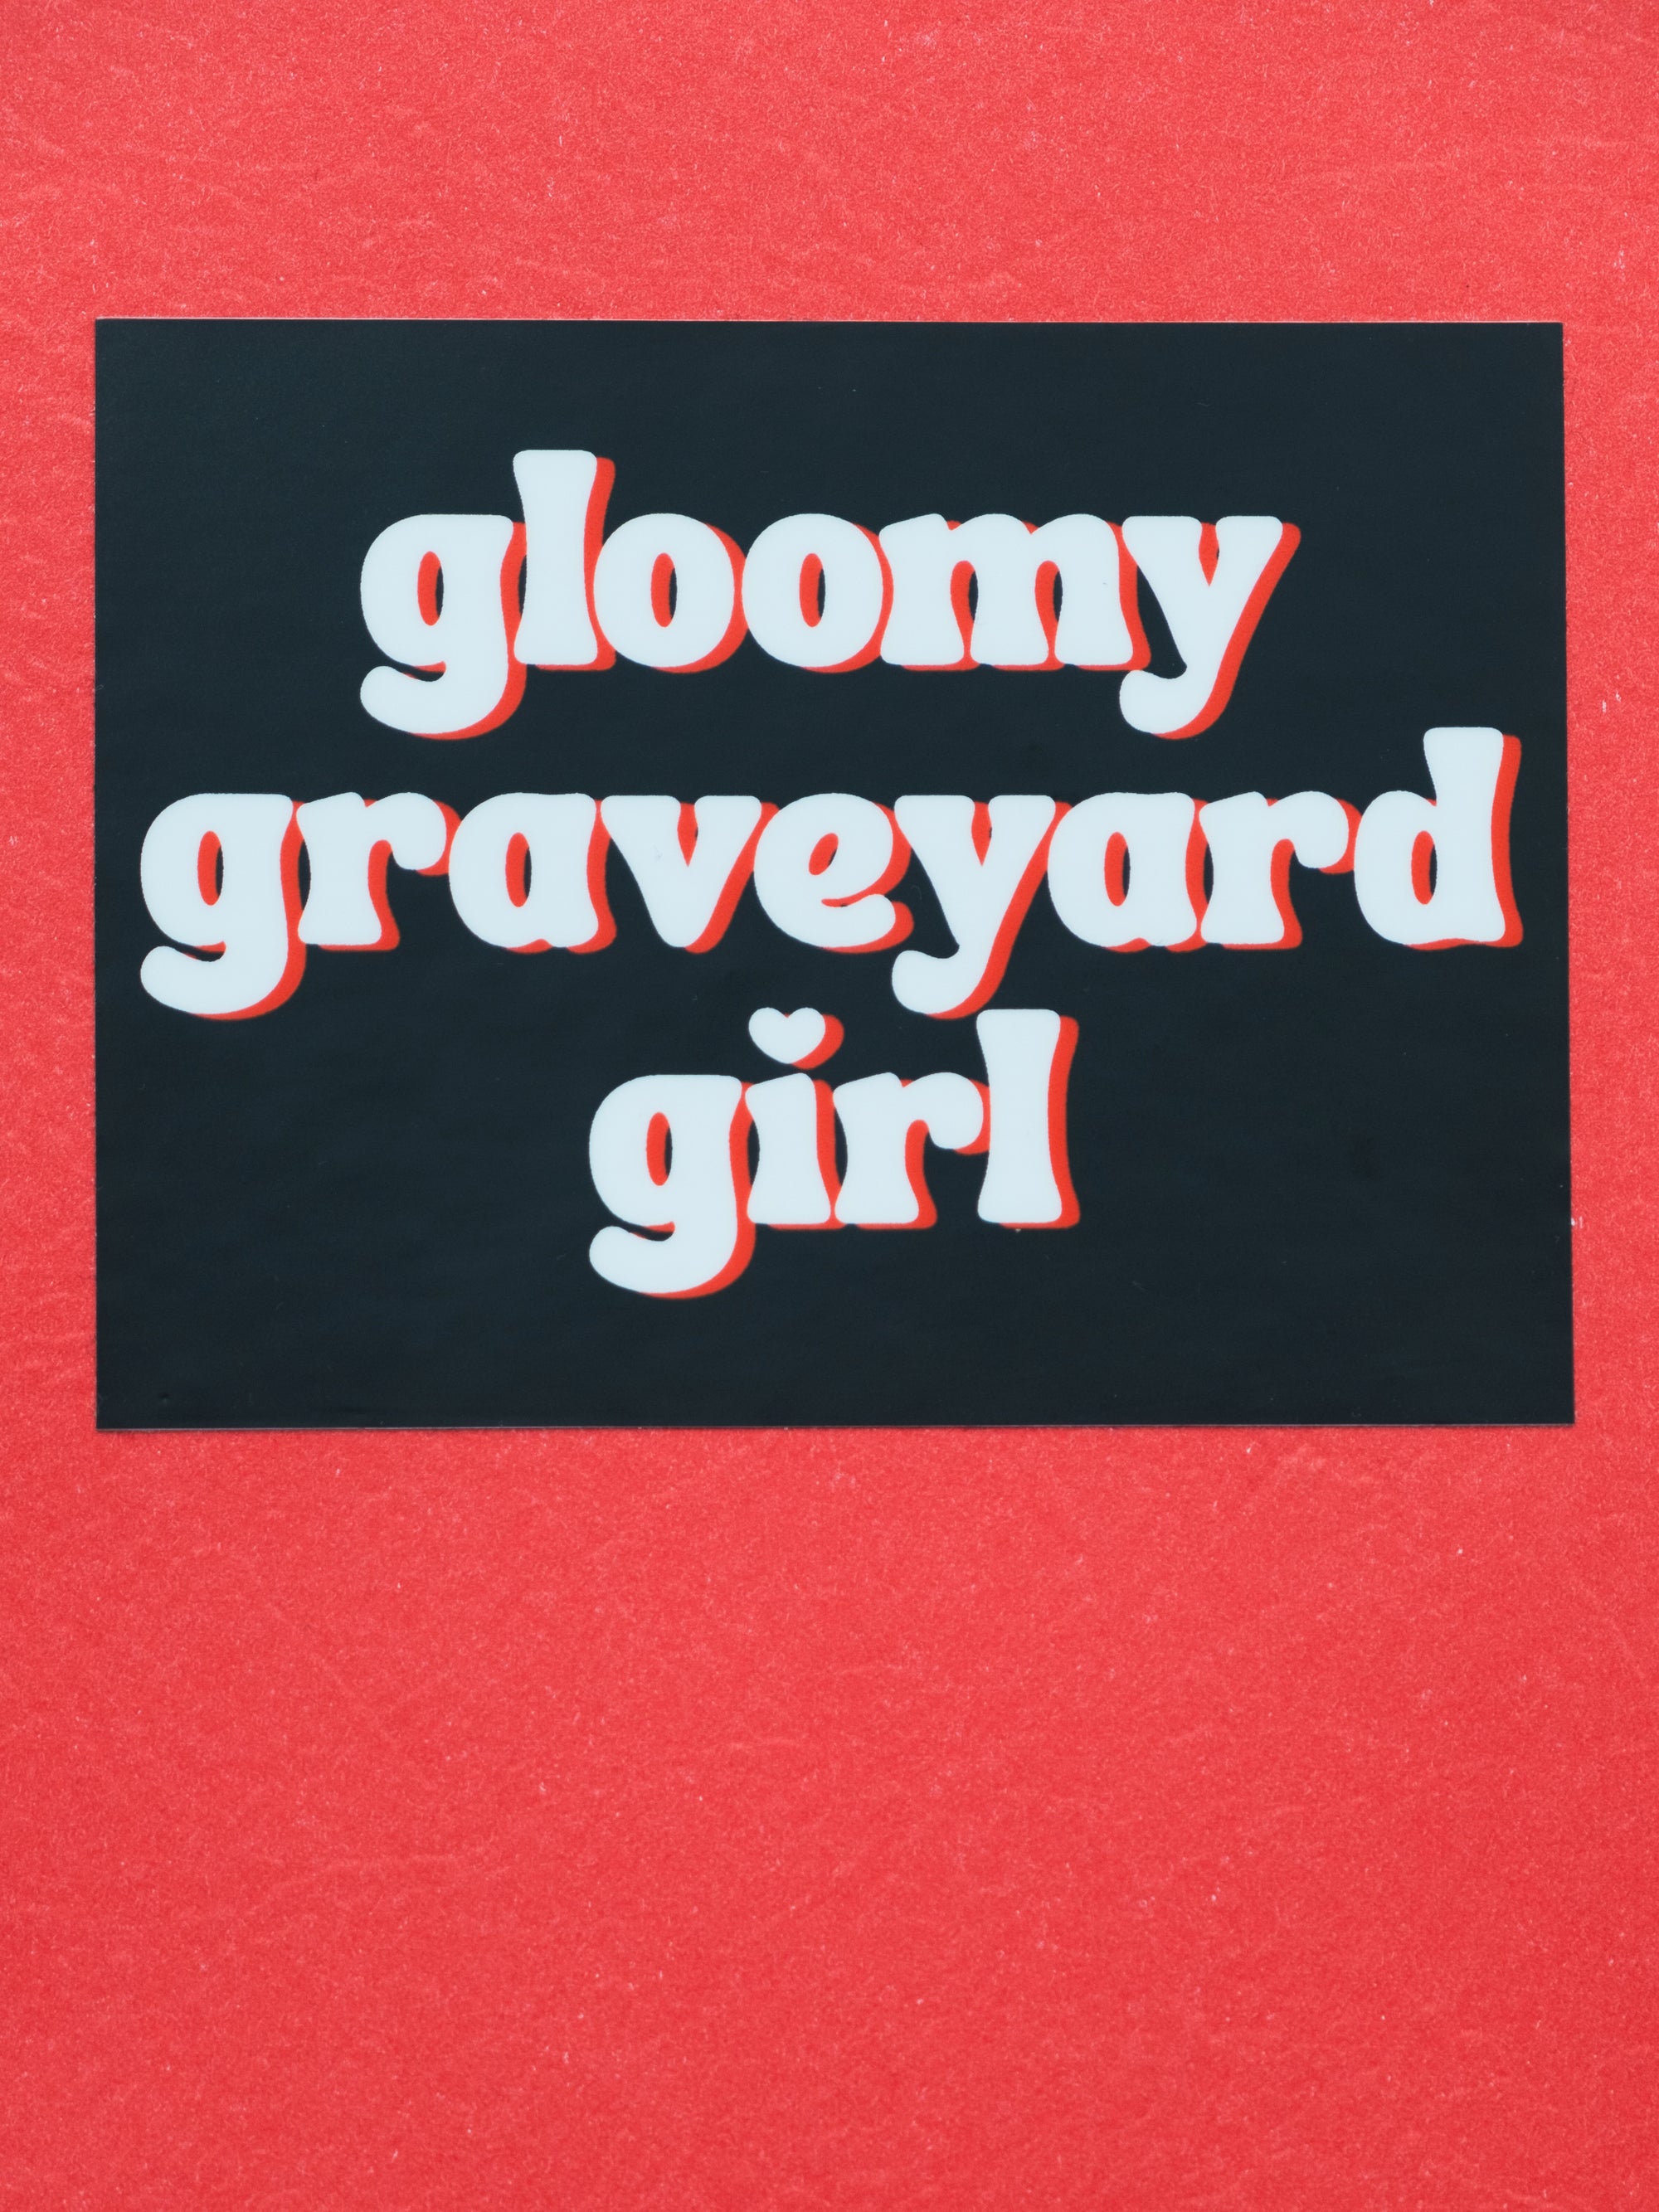 Gloomy Graveyard Girl Sticker